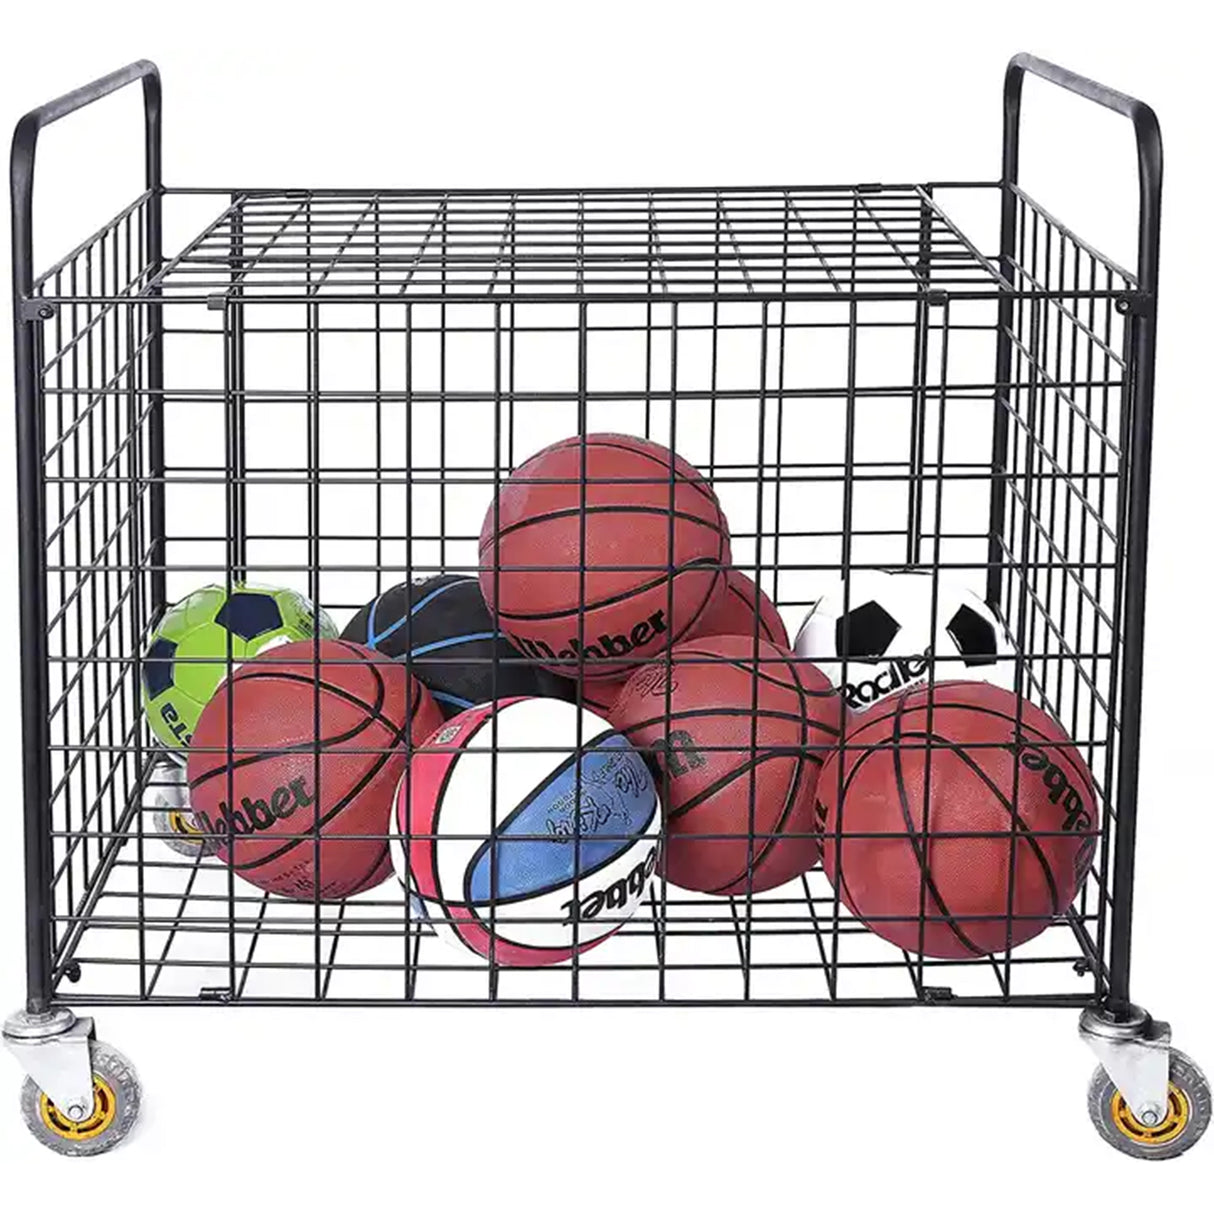 Ball Rack Cage